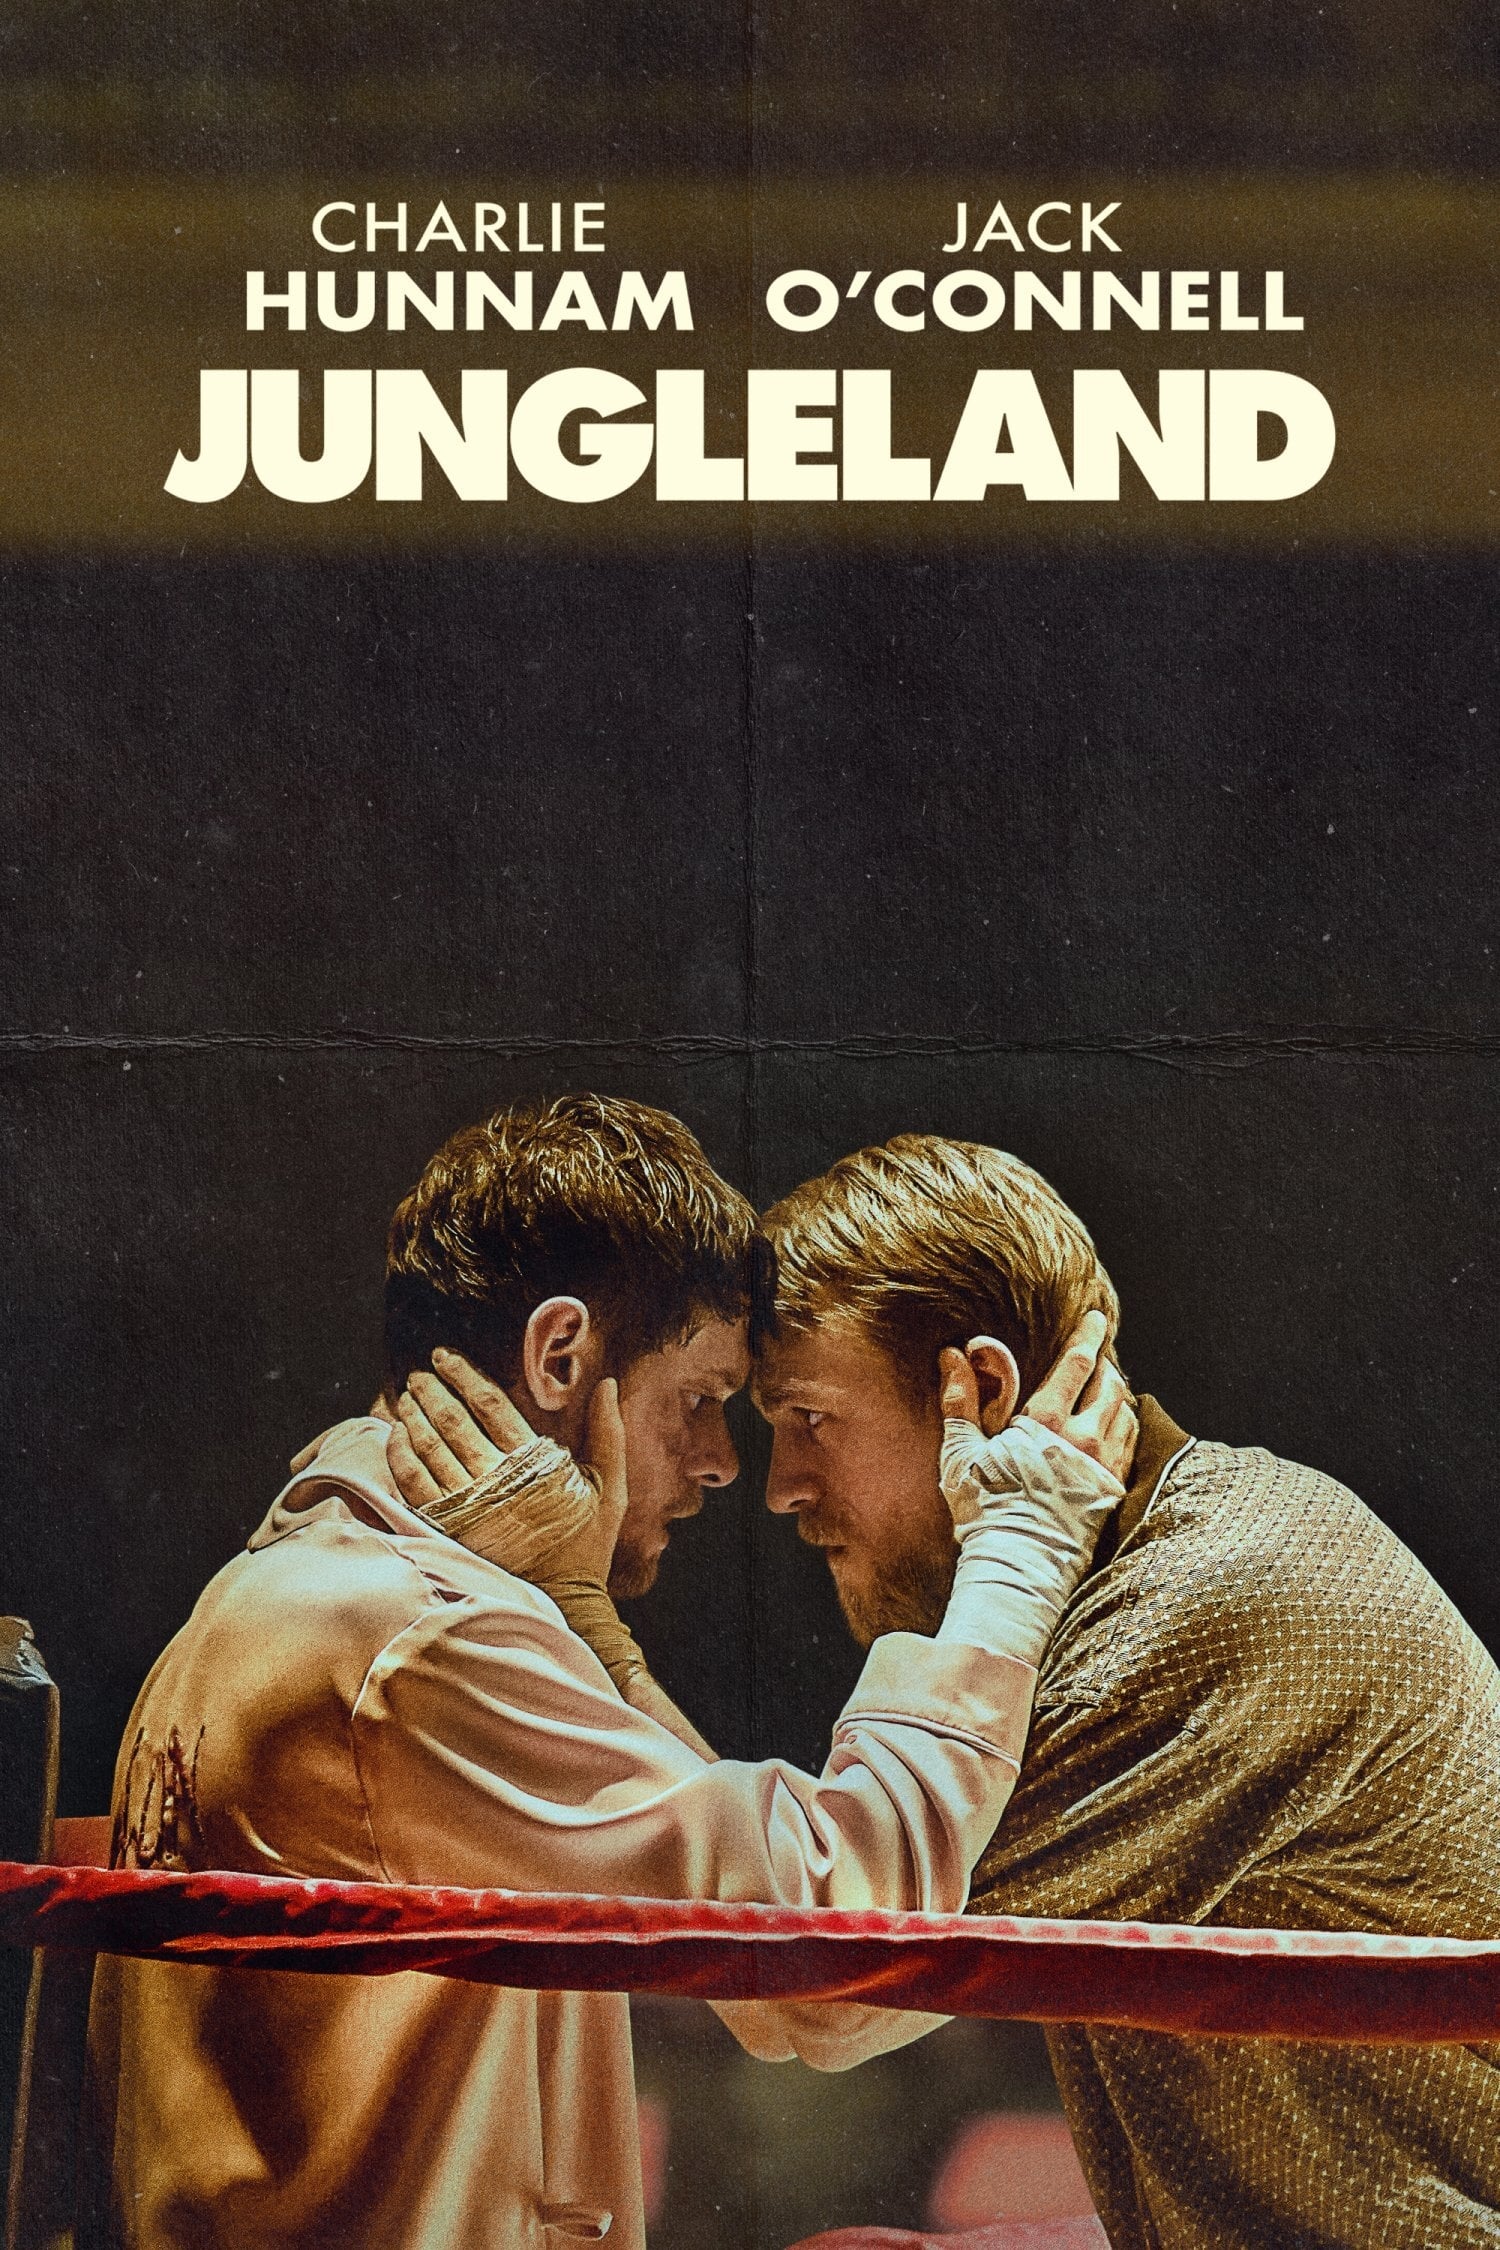 Jungleland [HD] (2019)